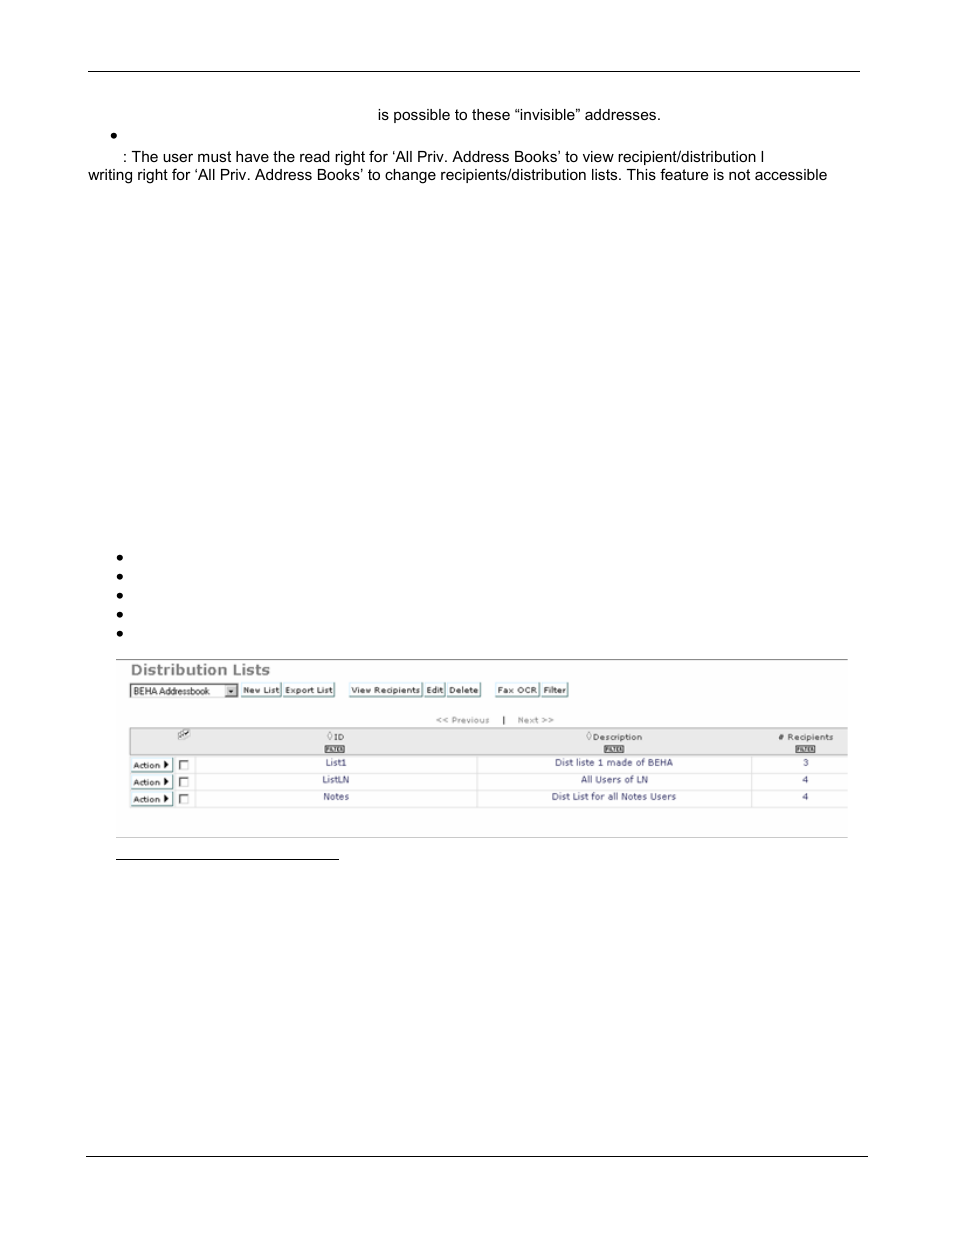 Distribution lists | Kofax Communication Server 9.1 User Manual | Page 34 / 85